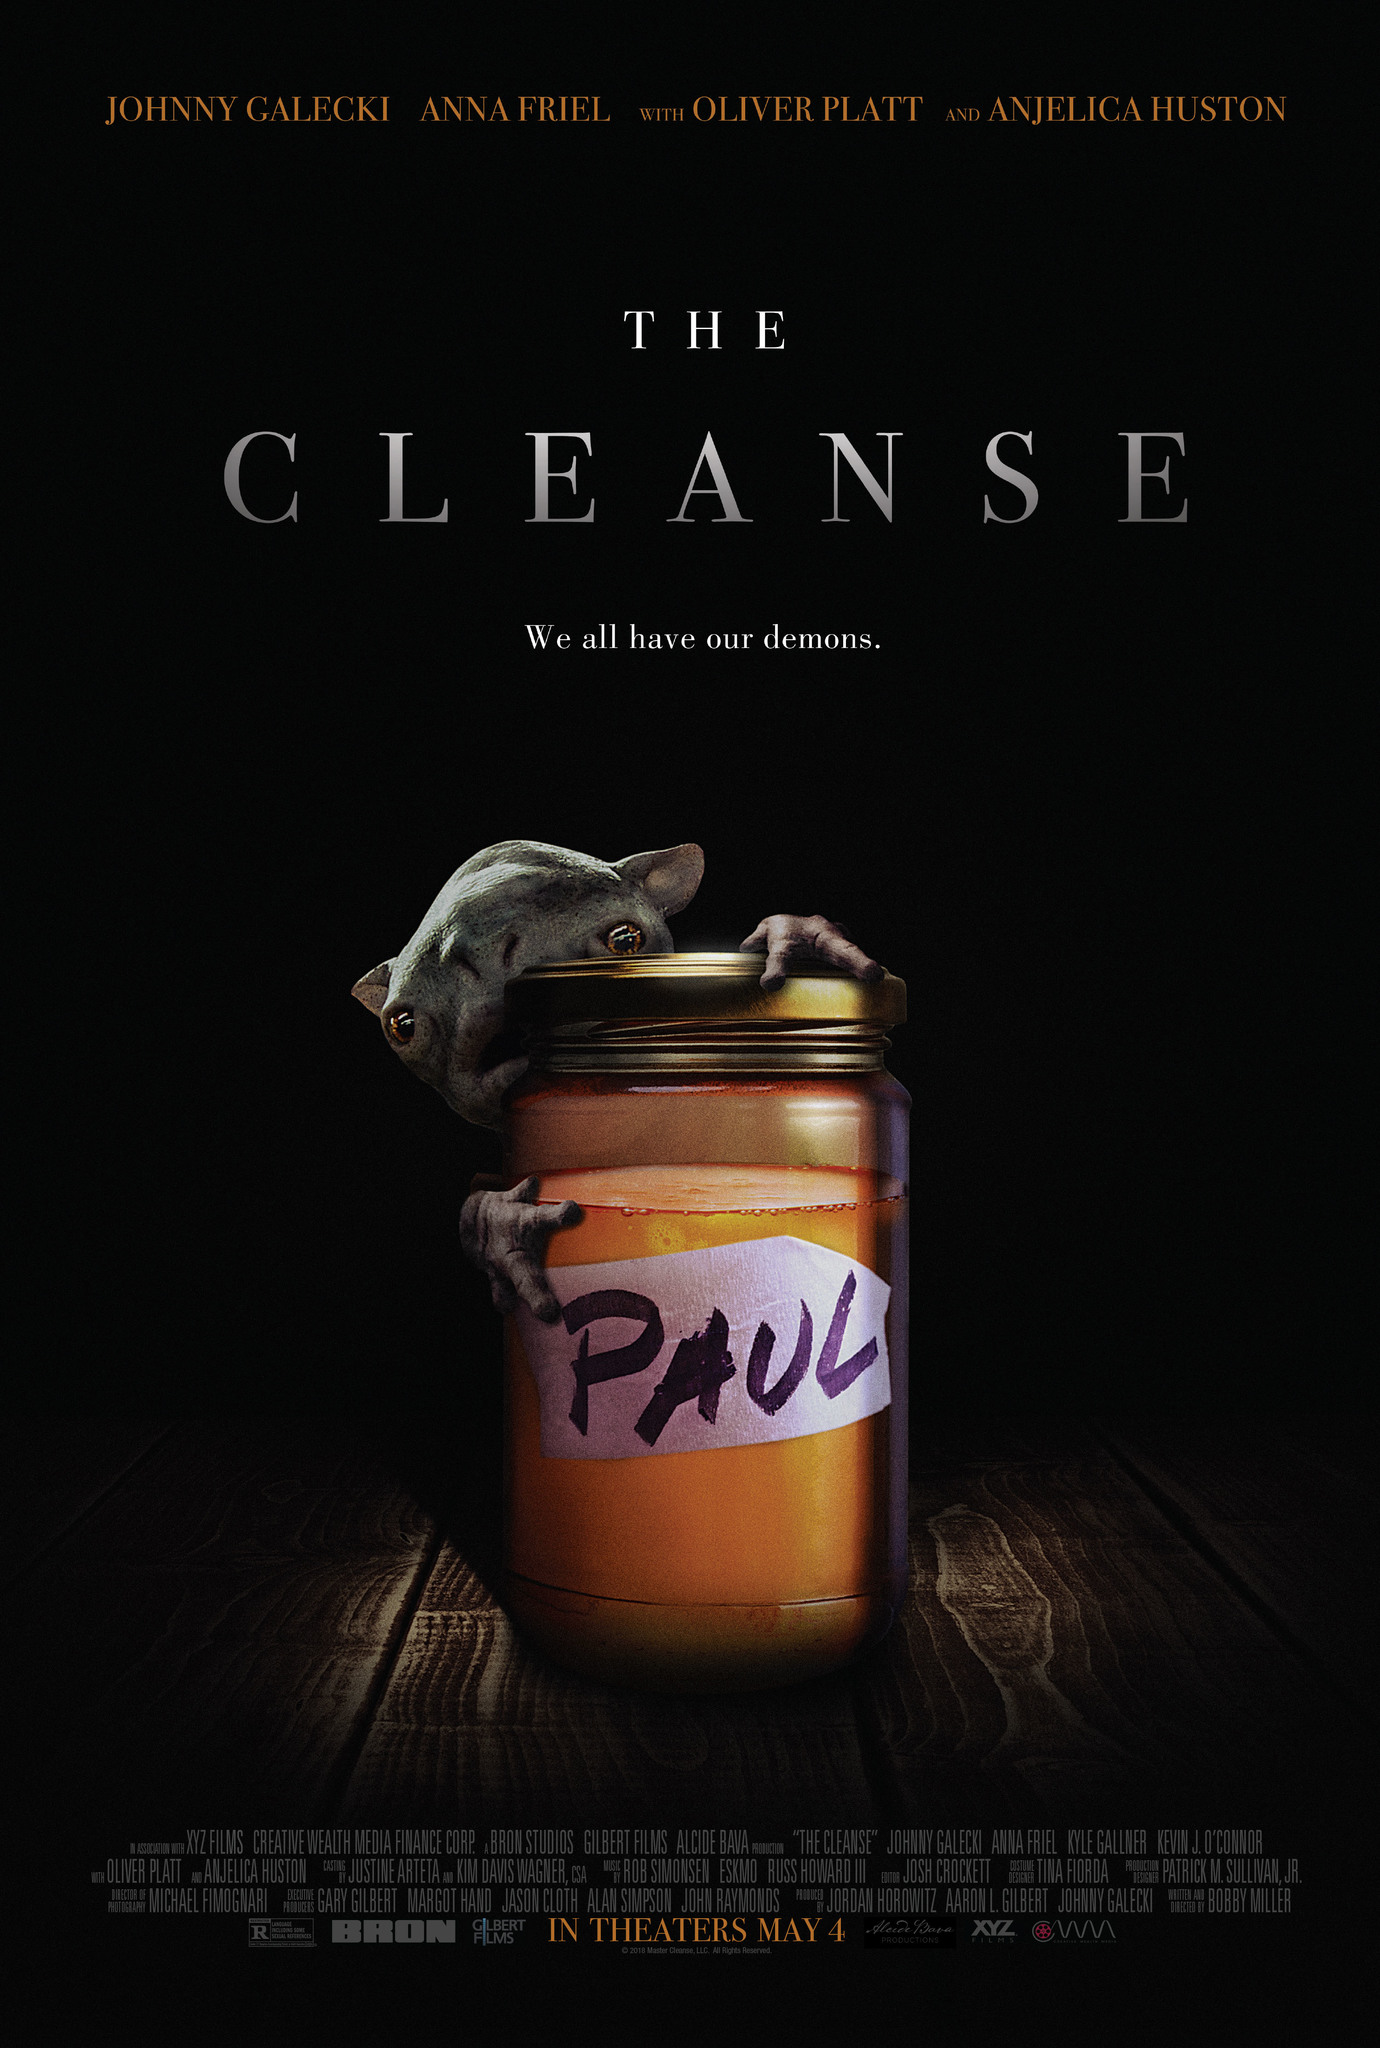 Nonton film The Cleanse layarkaca21 indoxx1 ganool online streaming terbaru